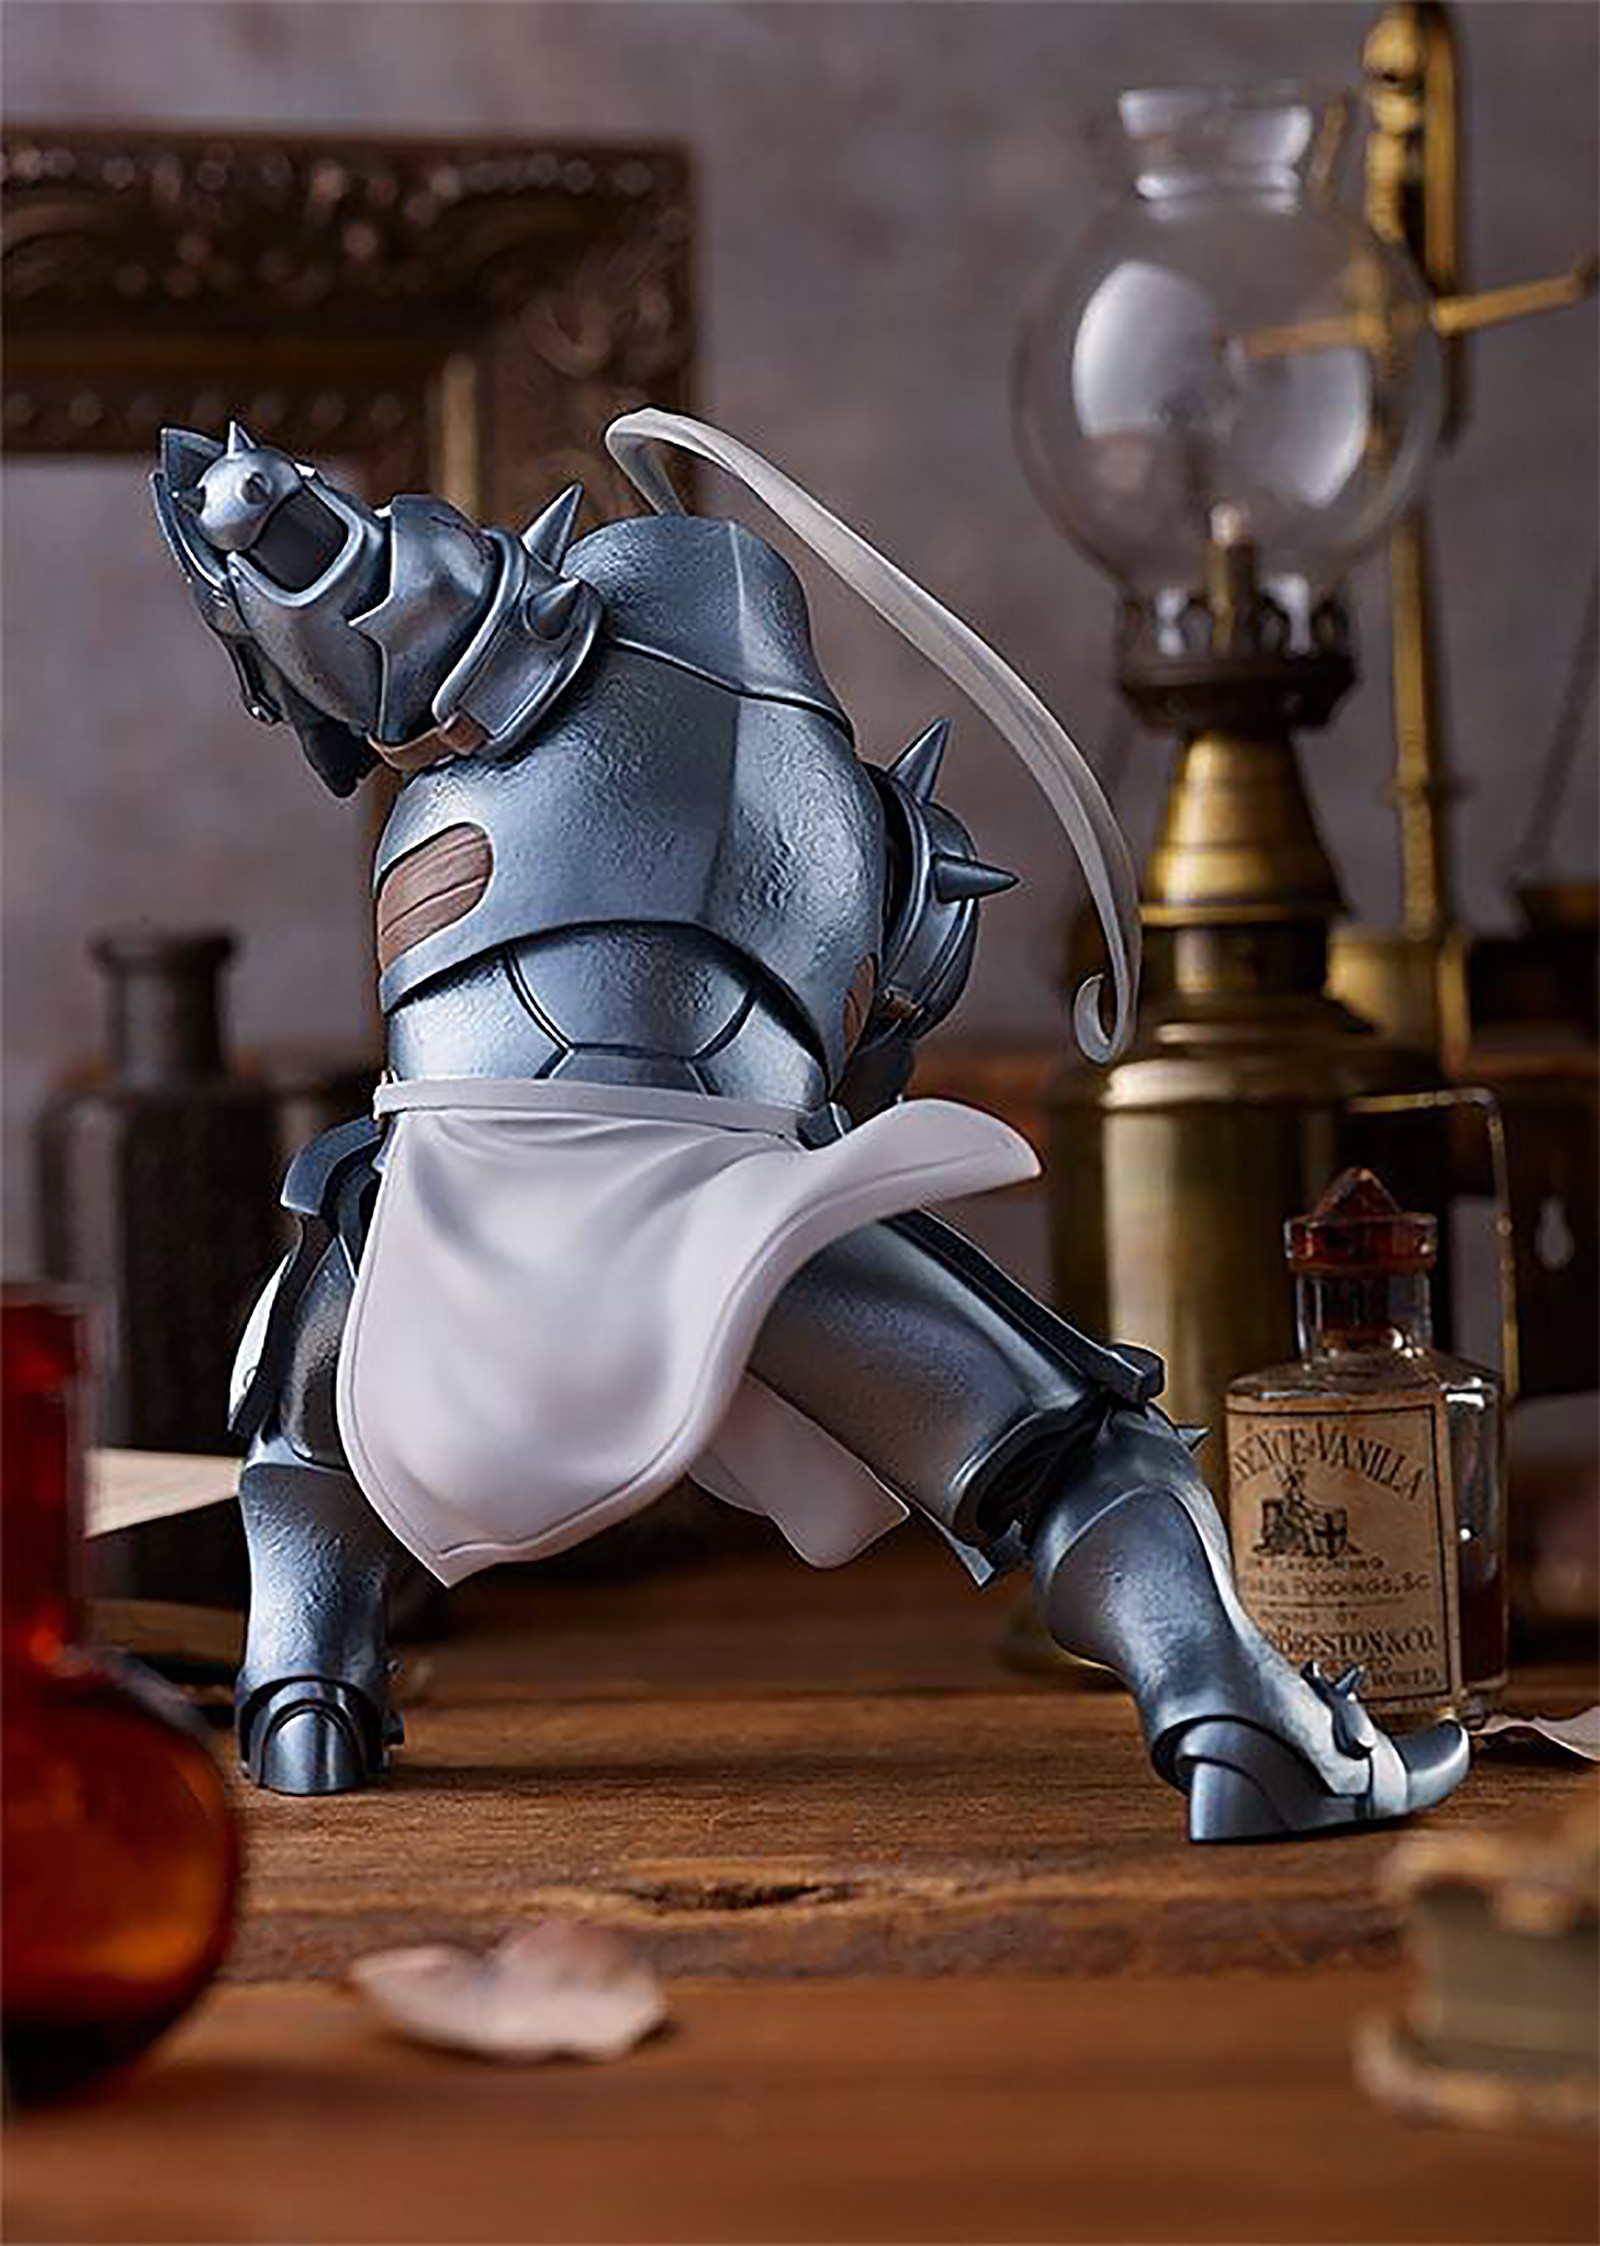 Fullmetal Alchemist - Alphonse Elric Figur